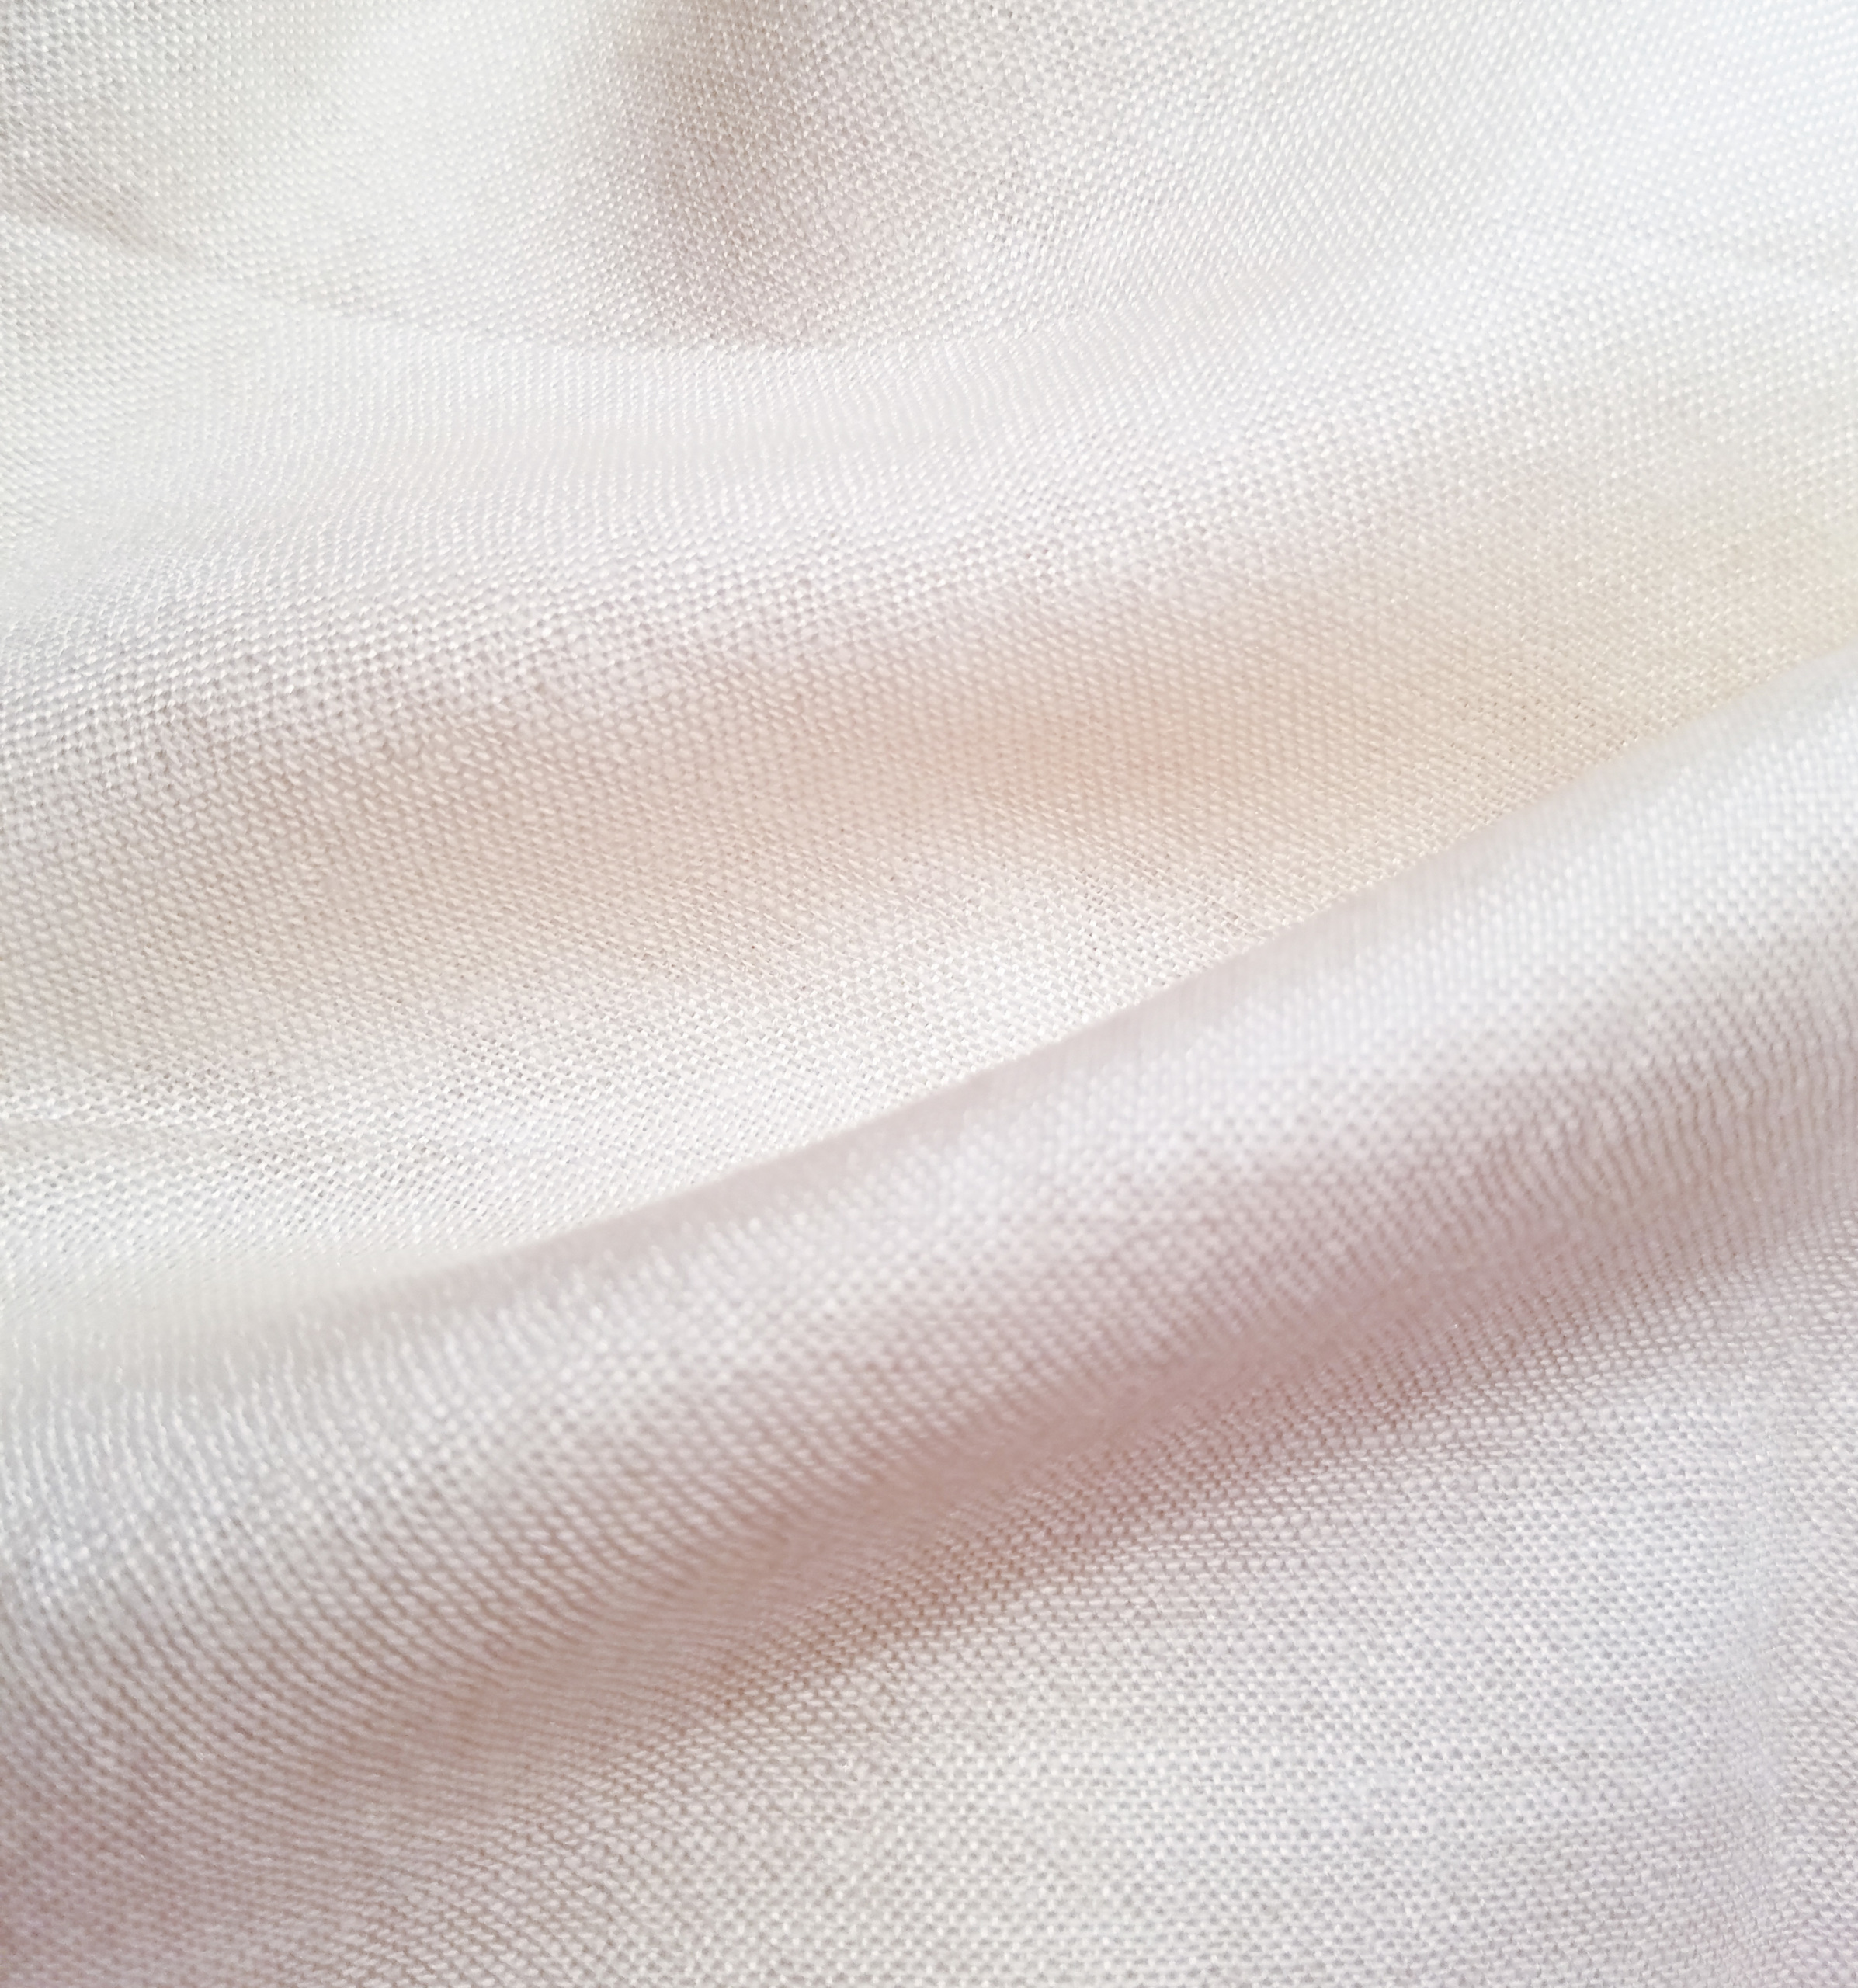 Product Details  Yōmō - Silk-Blend Yarn (60% Bombyx Silk & 40